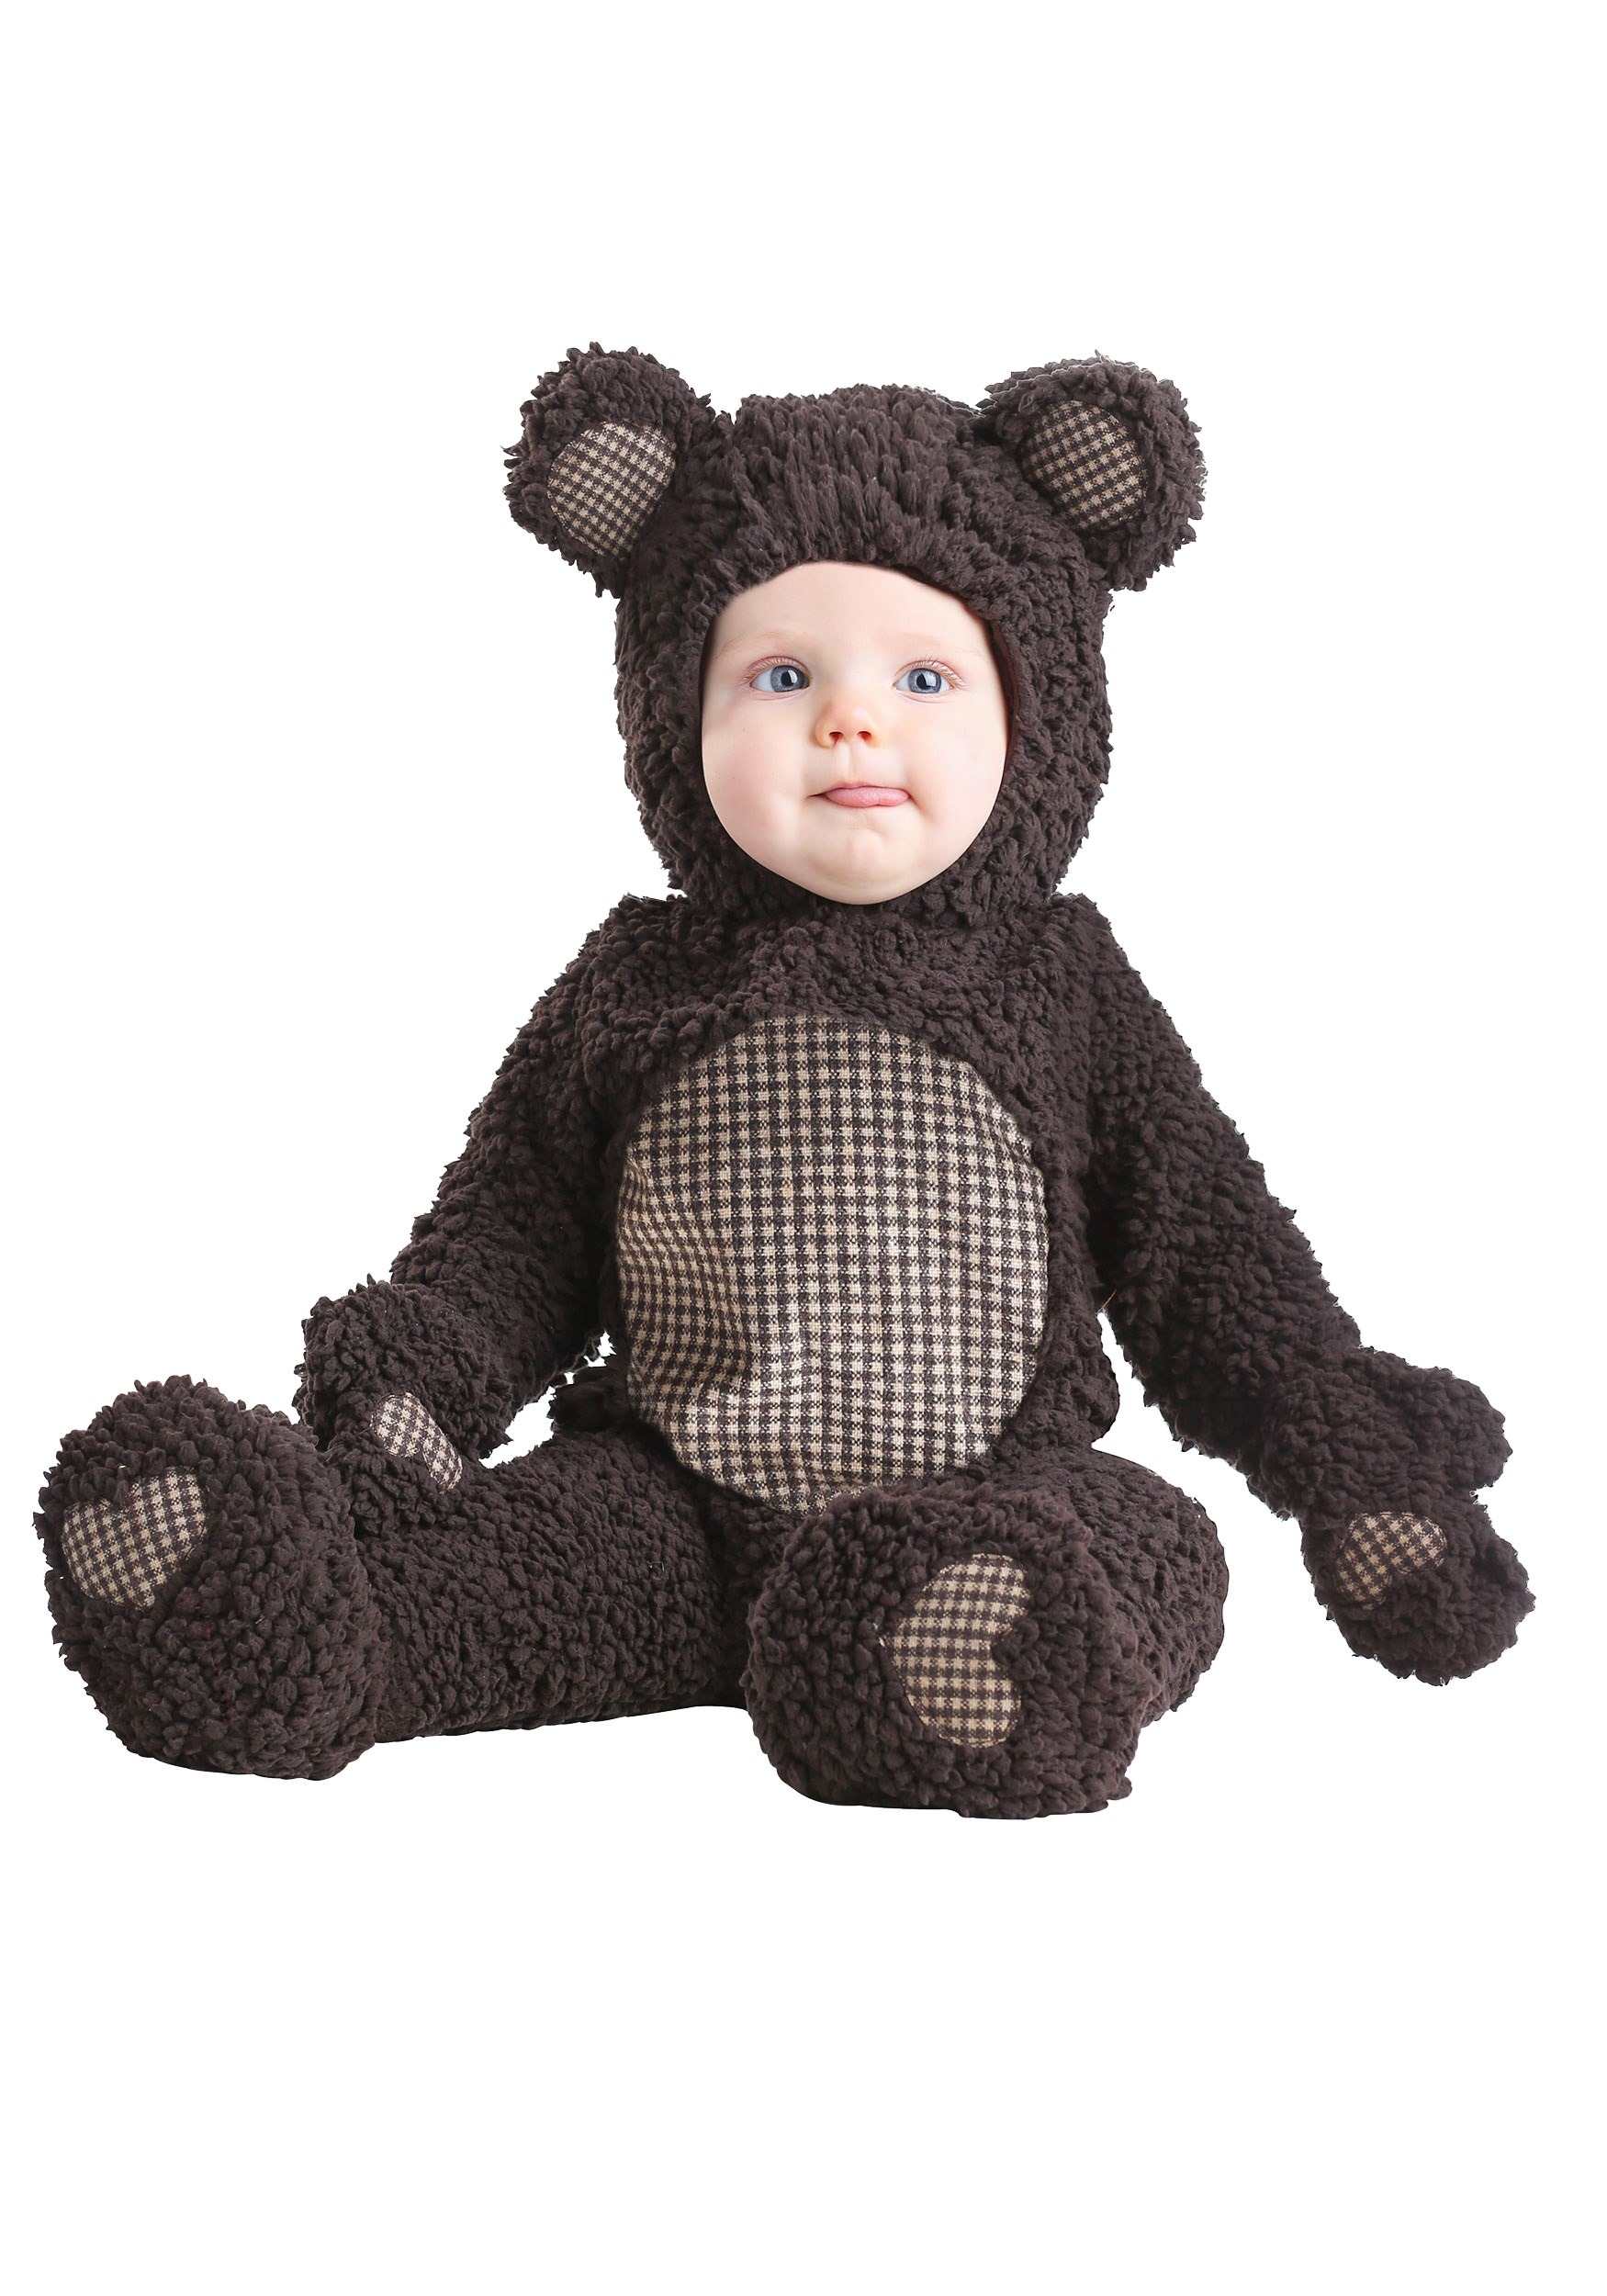 Infant Baby Bear Costume